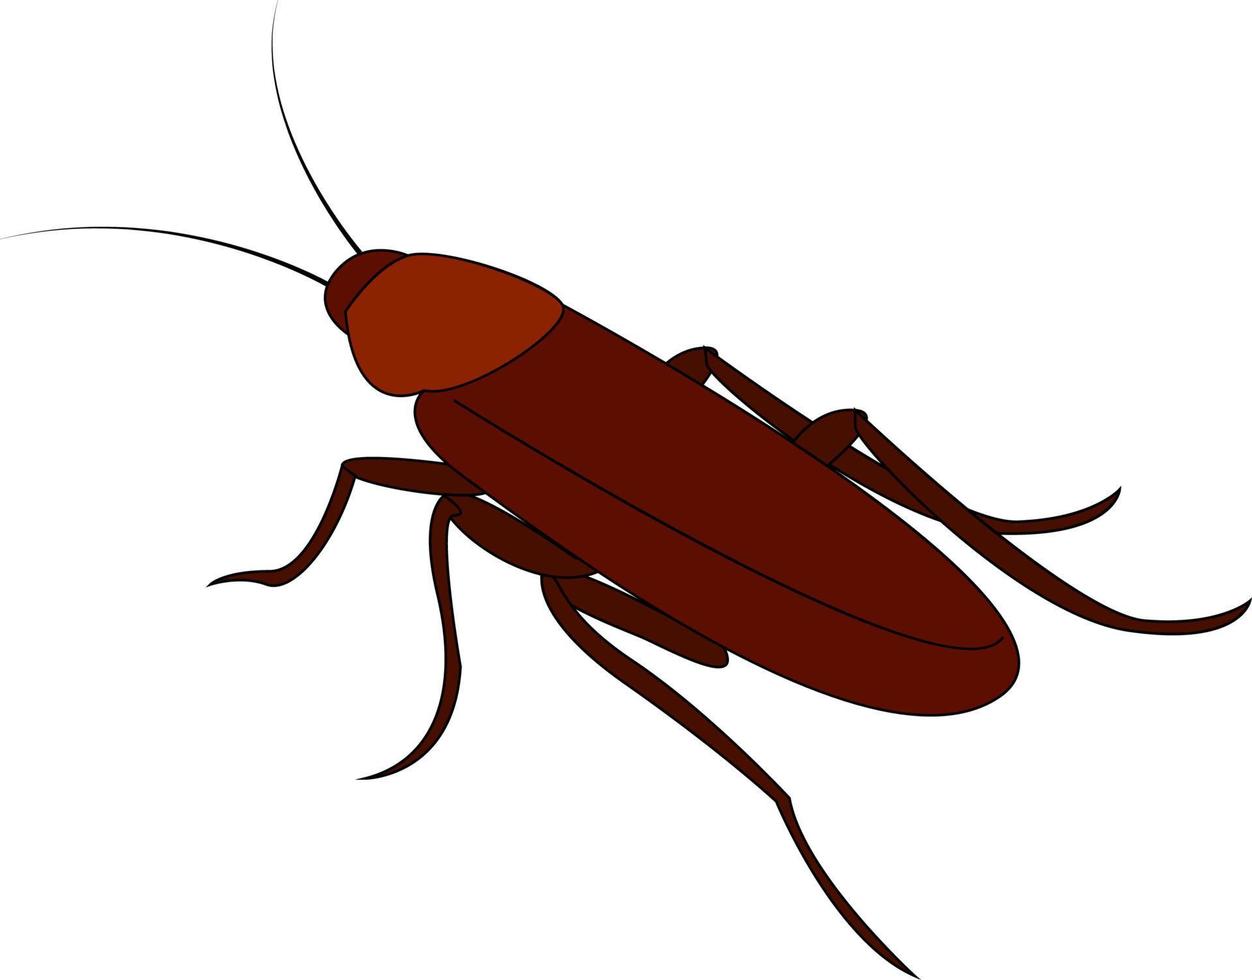 Cucaracha marrón, ilustración, vector sobre fondo blanco.